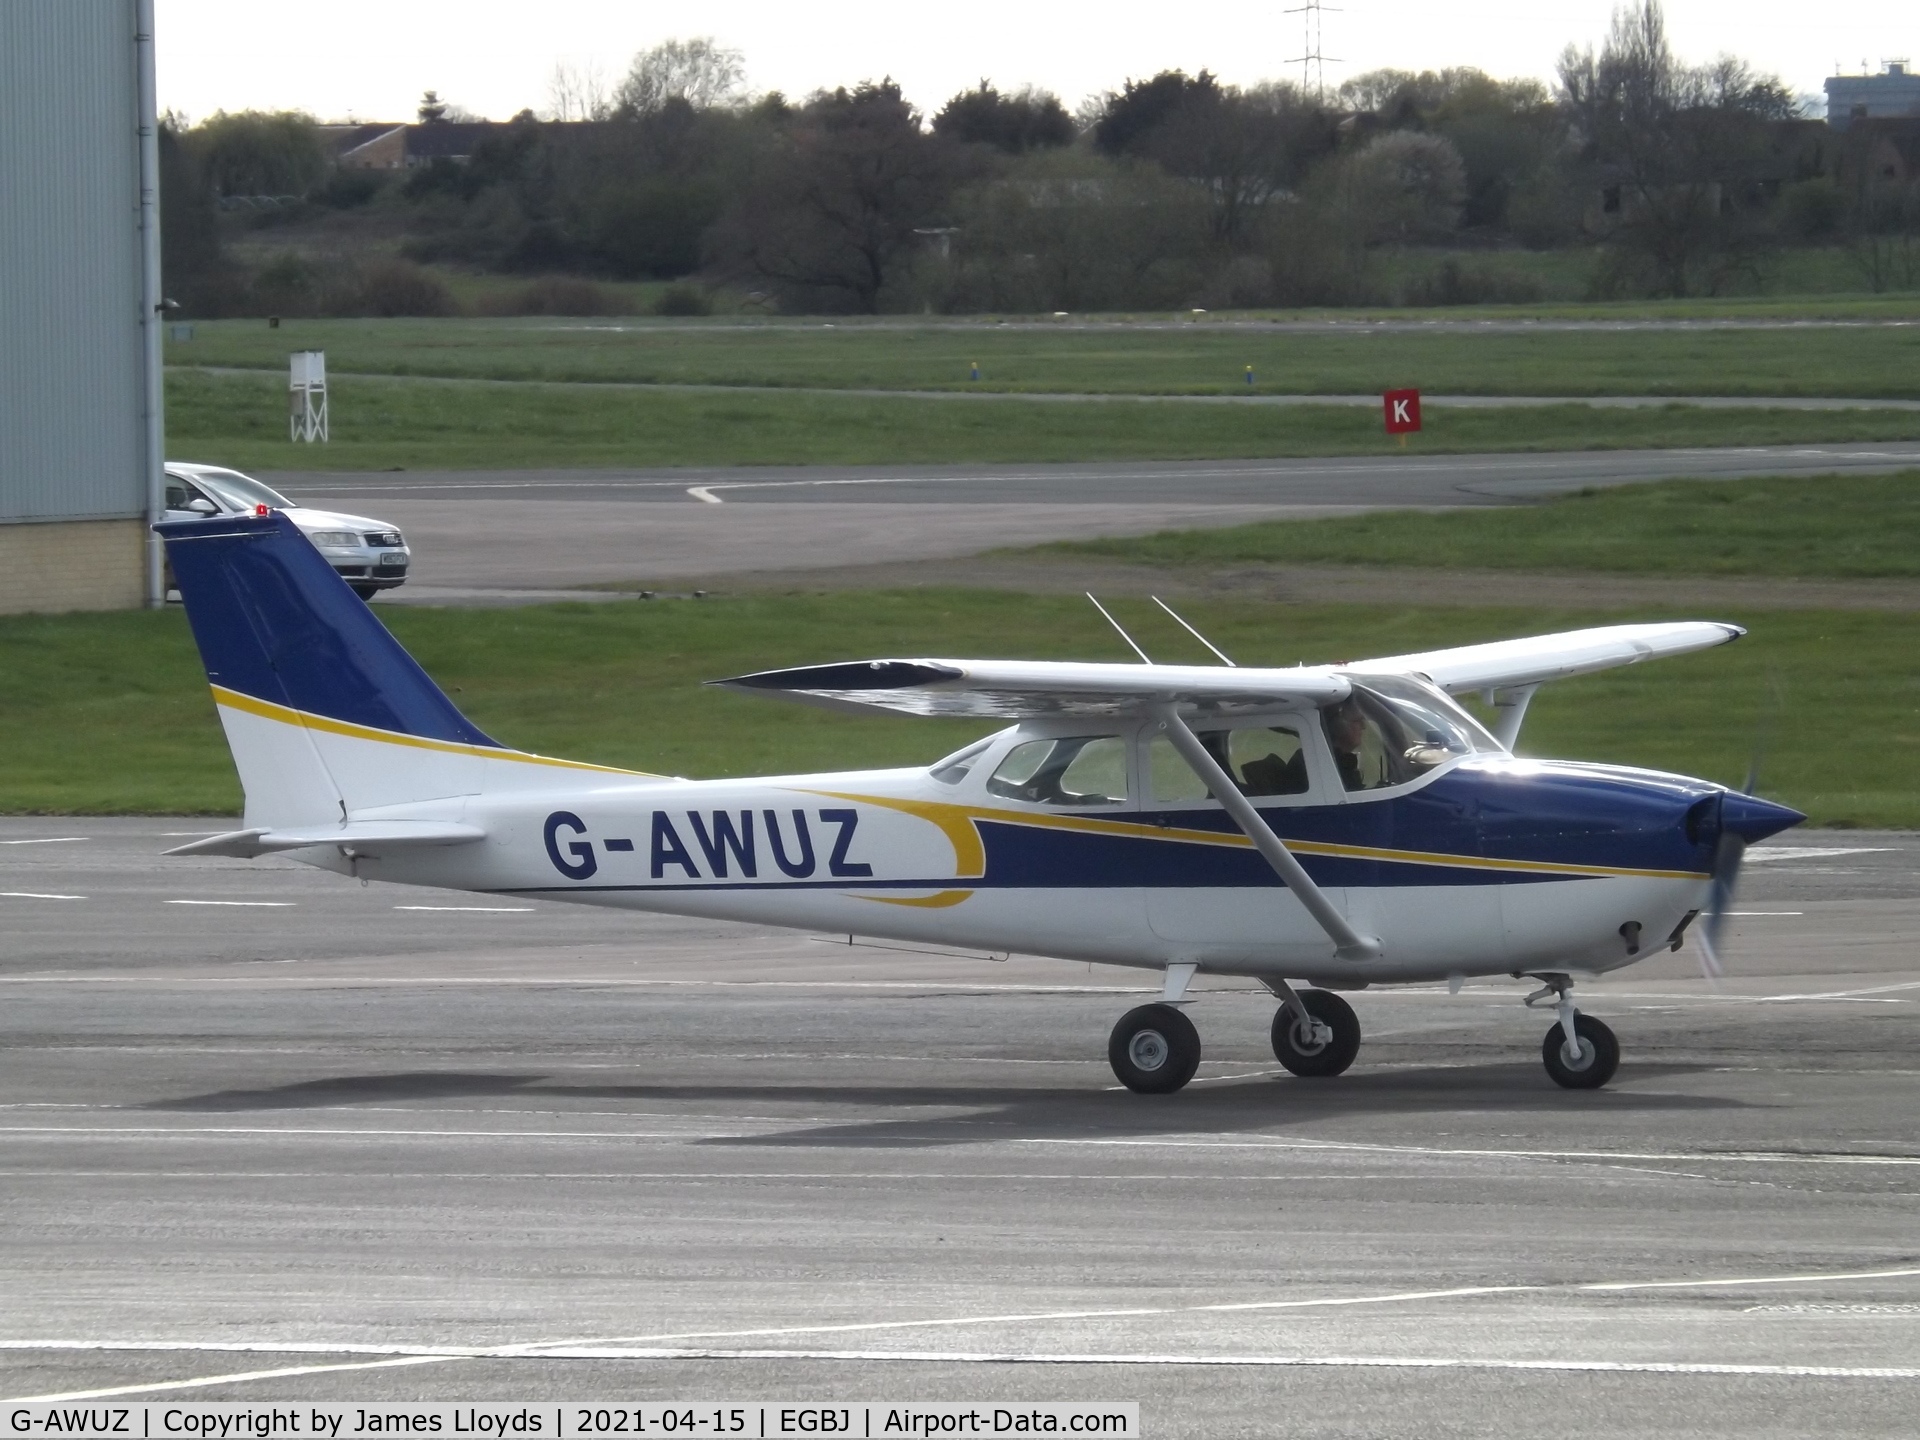 G-AWUZ, 1968 Reims F172H Skyhawk C/N 0587, At Gloucestershire Airport.